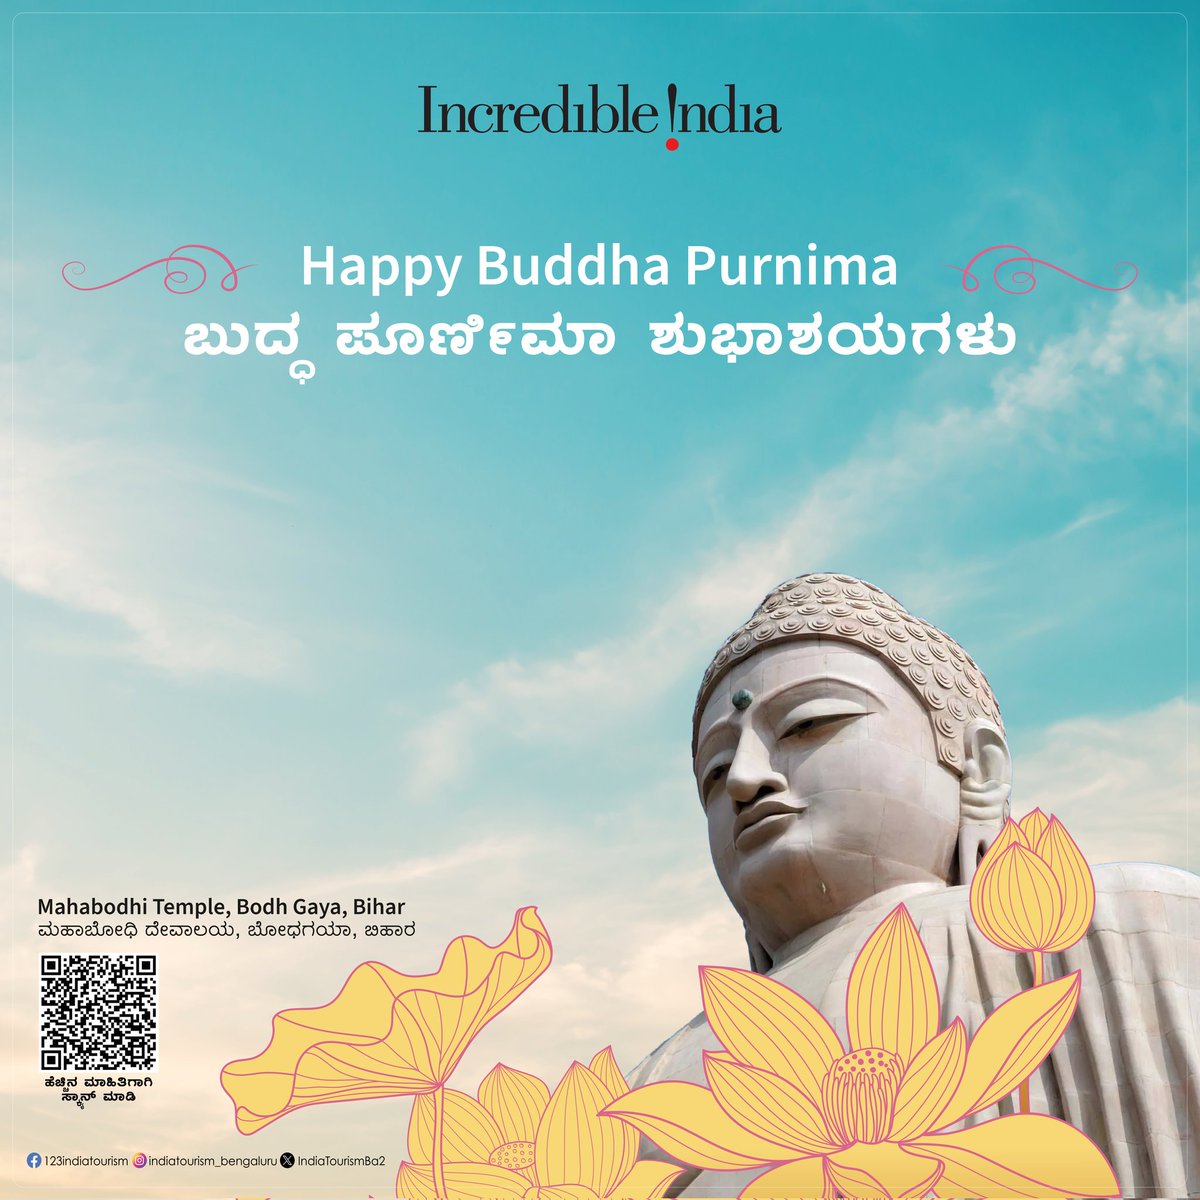 Best wishes to all on the auspicious occasion of Buddha Purnima from us at @tourismgoi #Bengaluru Office. #Buddhapurnima #Incredibleindia @TourismBiharGov